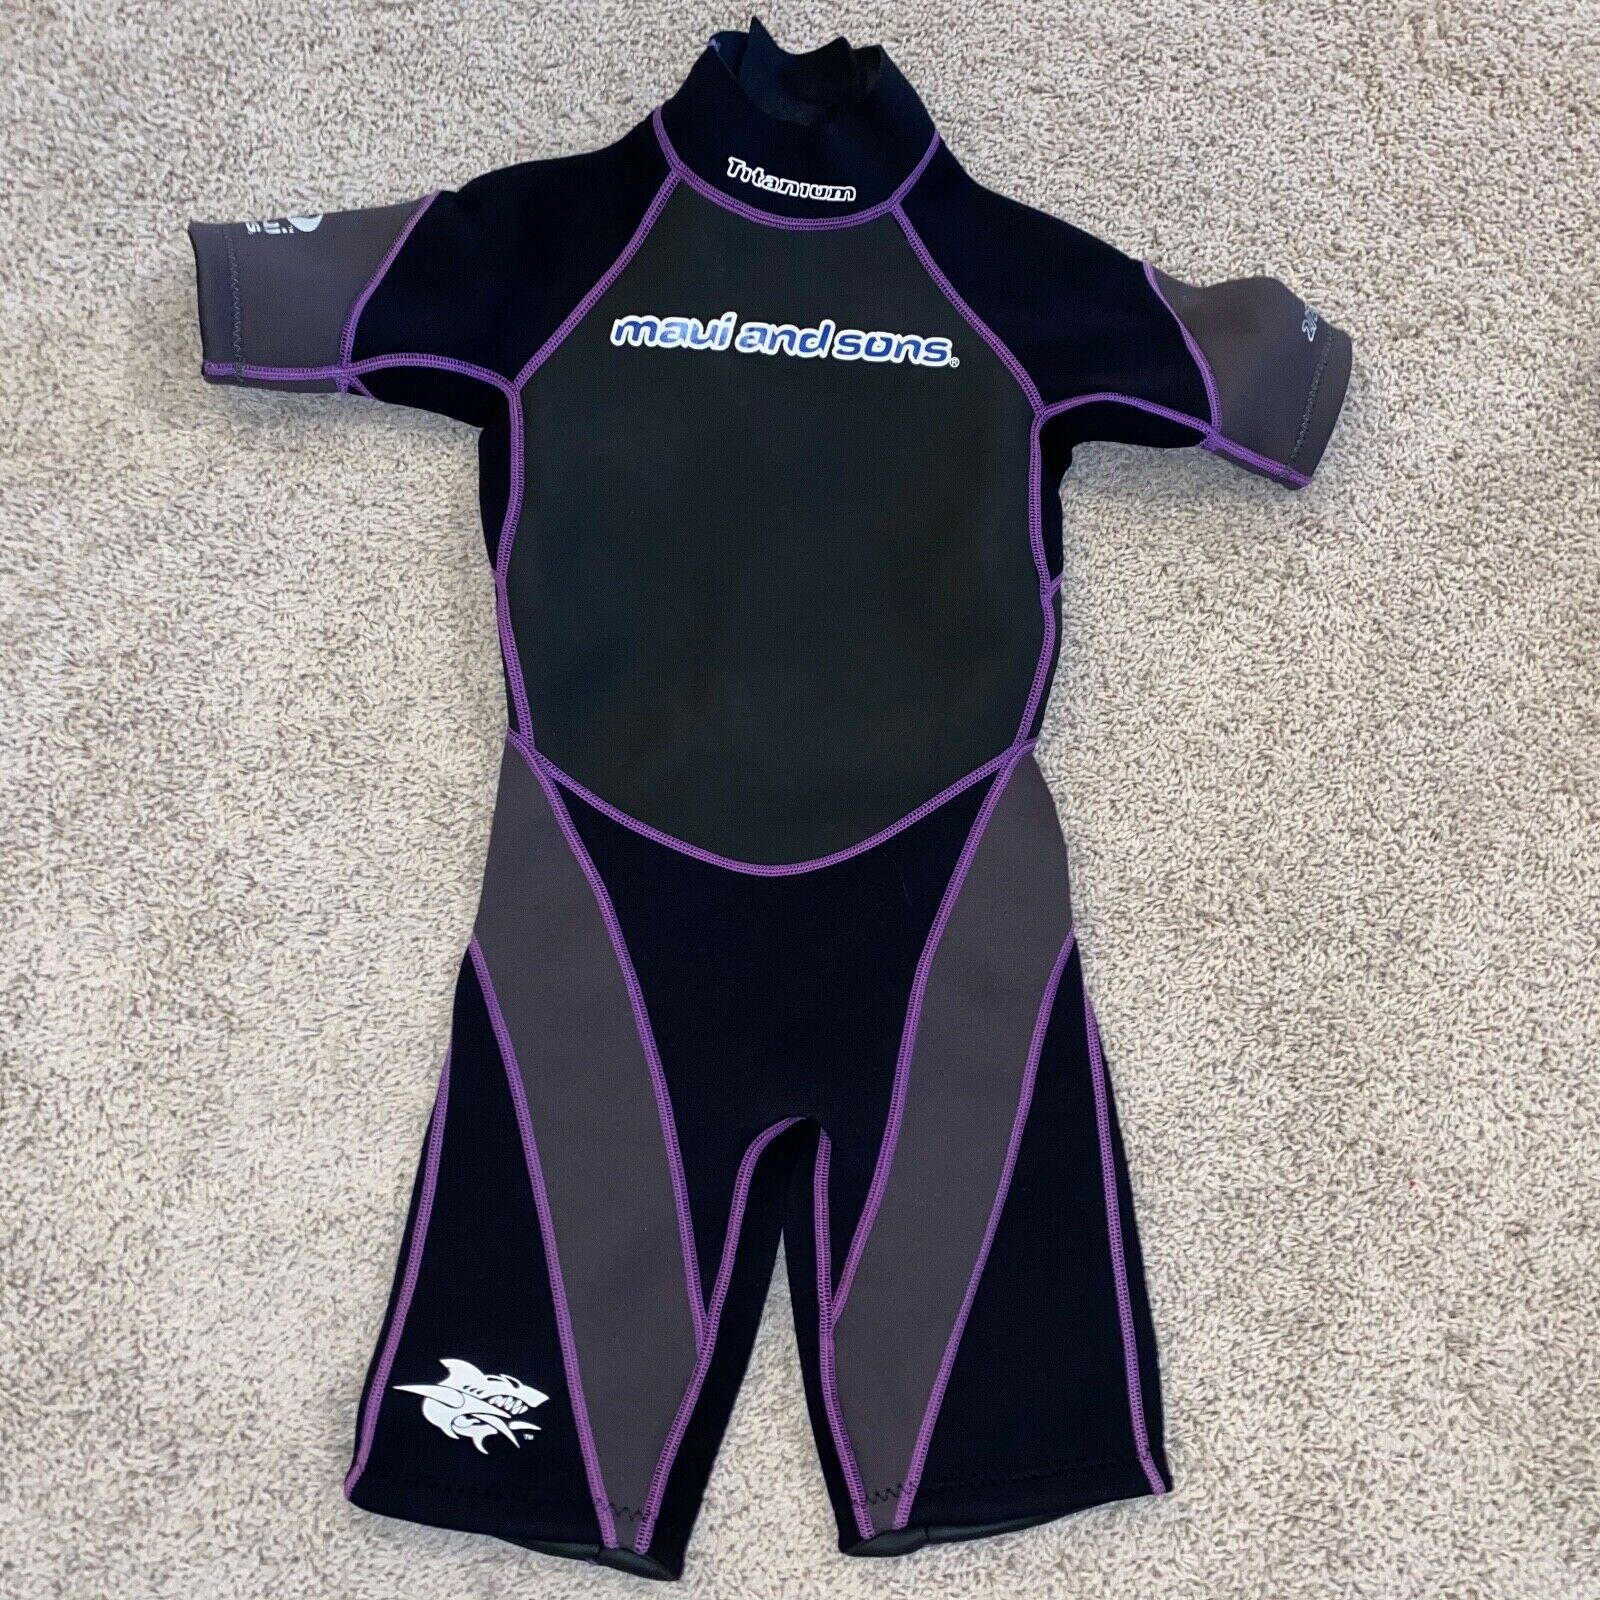 Maui & Sons Titanium Shortie Wetsuit Youth Size 10 Black Gray Purple Stitching